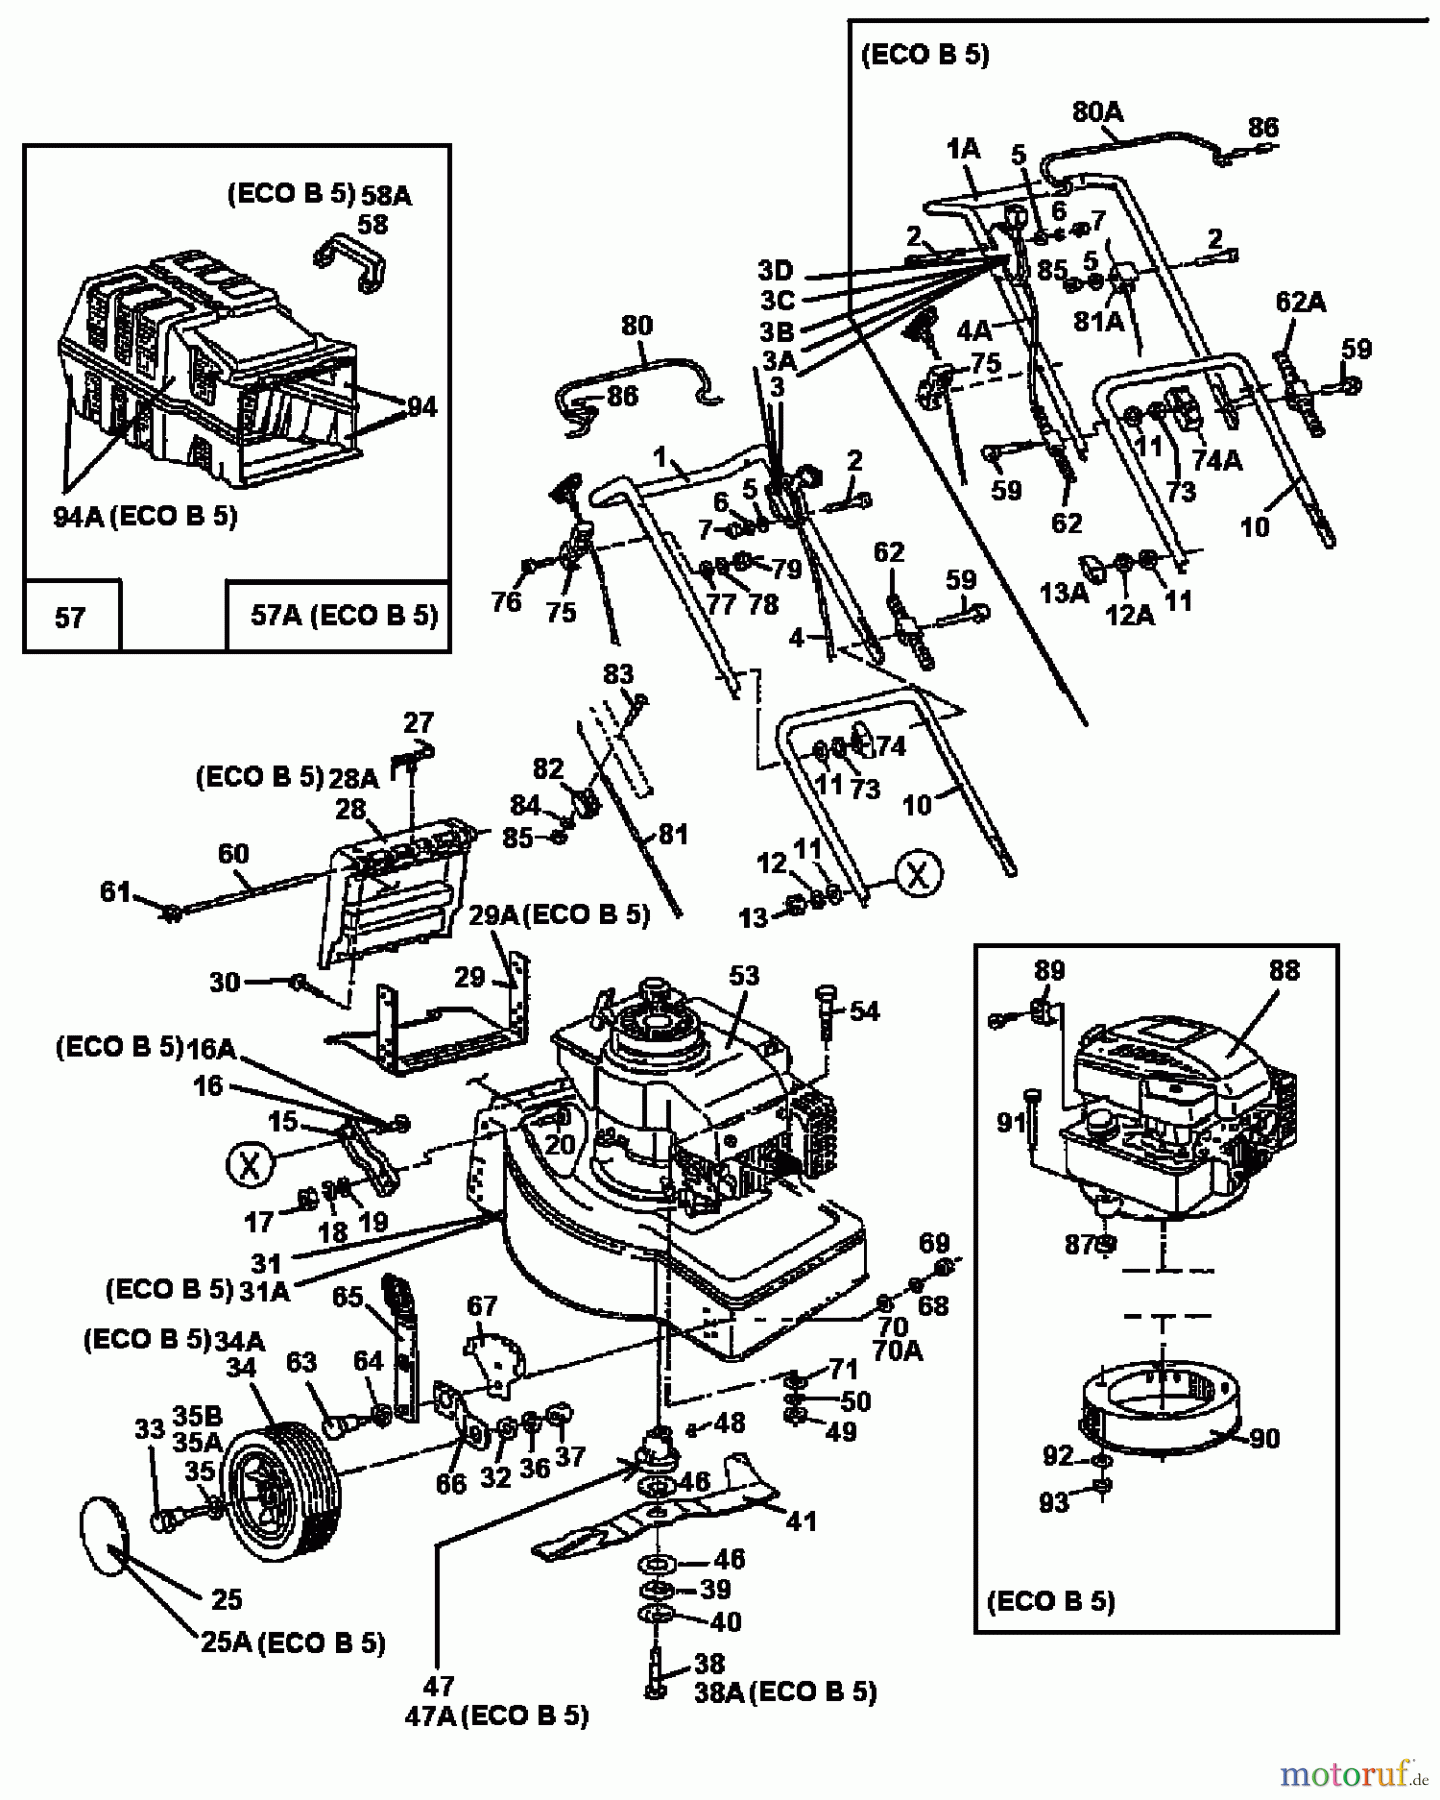  Gutbrod Petrol mower ECO B 5 04042.06  (1997) Basic machine